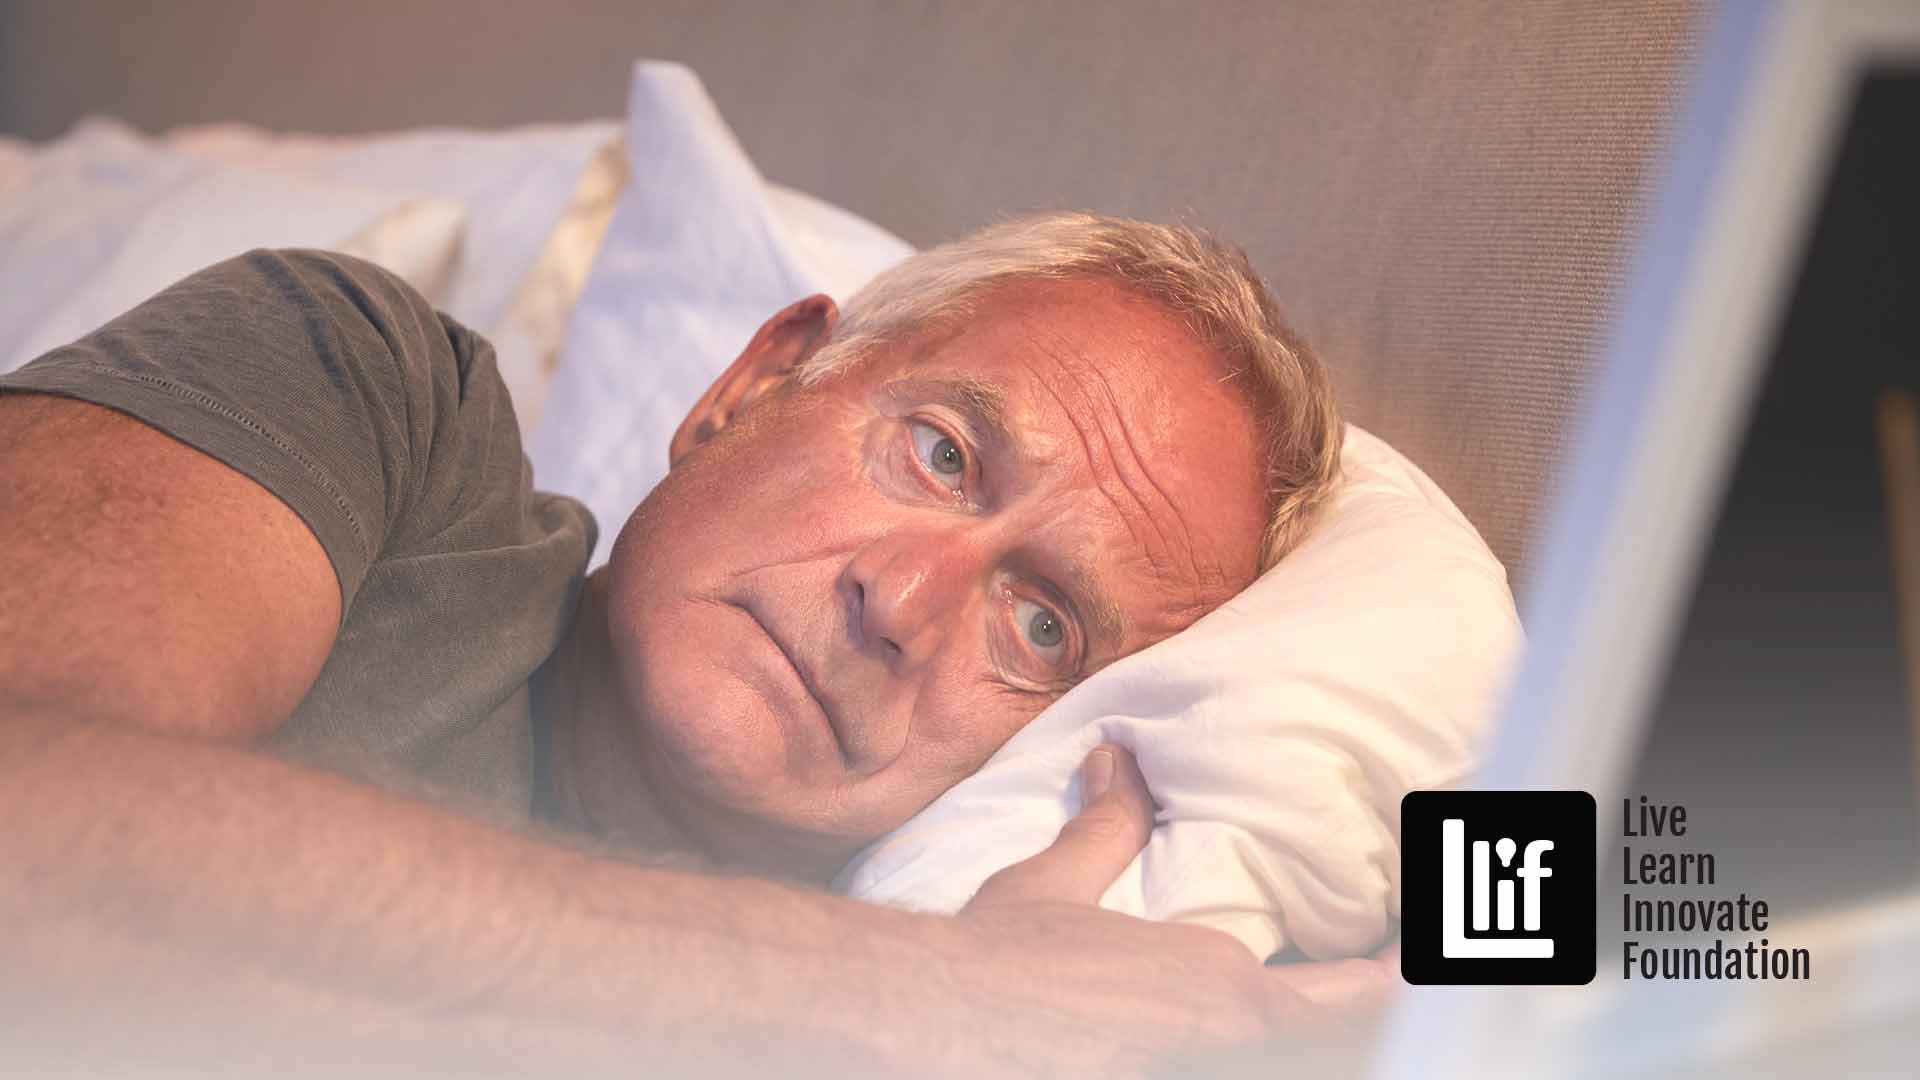 Sad Senior Man Lying In Bed Looking At Photo Frame